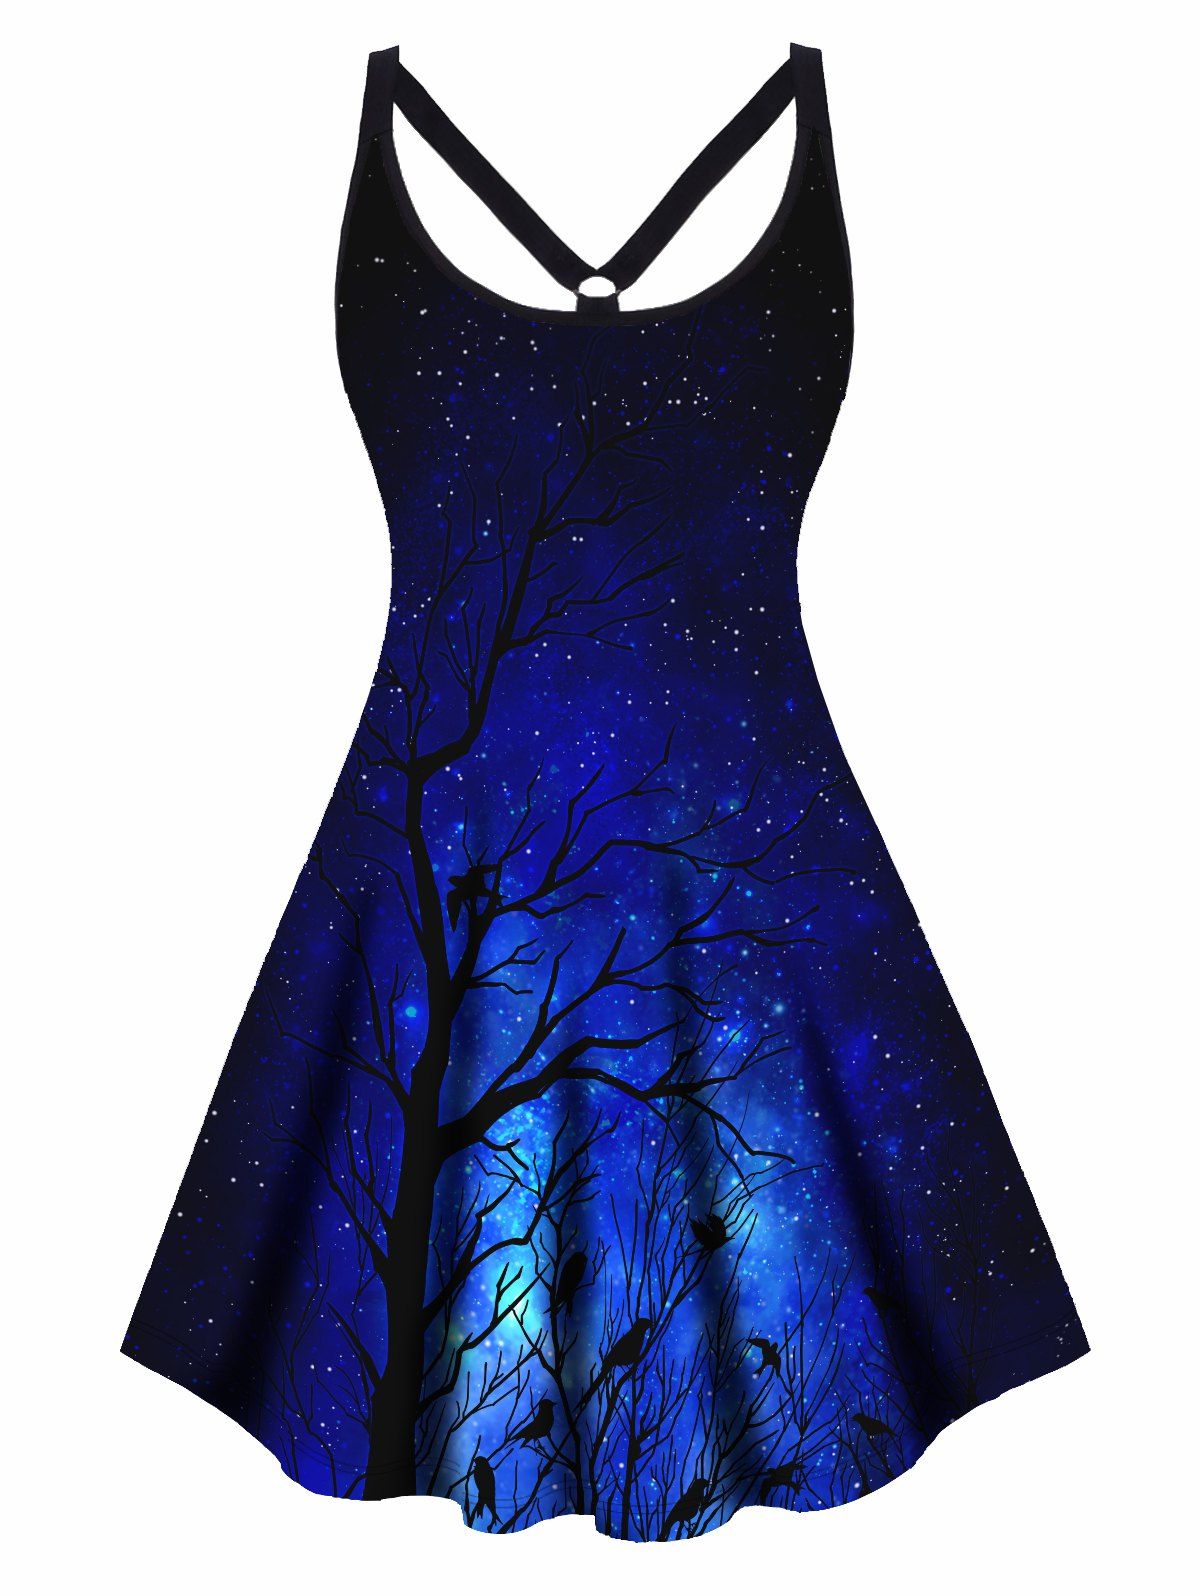 Plus Size Dress Galaxy Tree Branches Print Cut Out High Waisted A Line Mini Dress - BLACK 2X